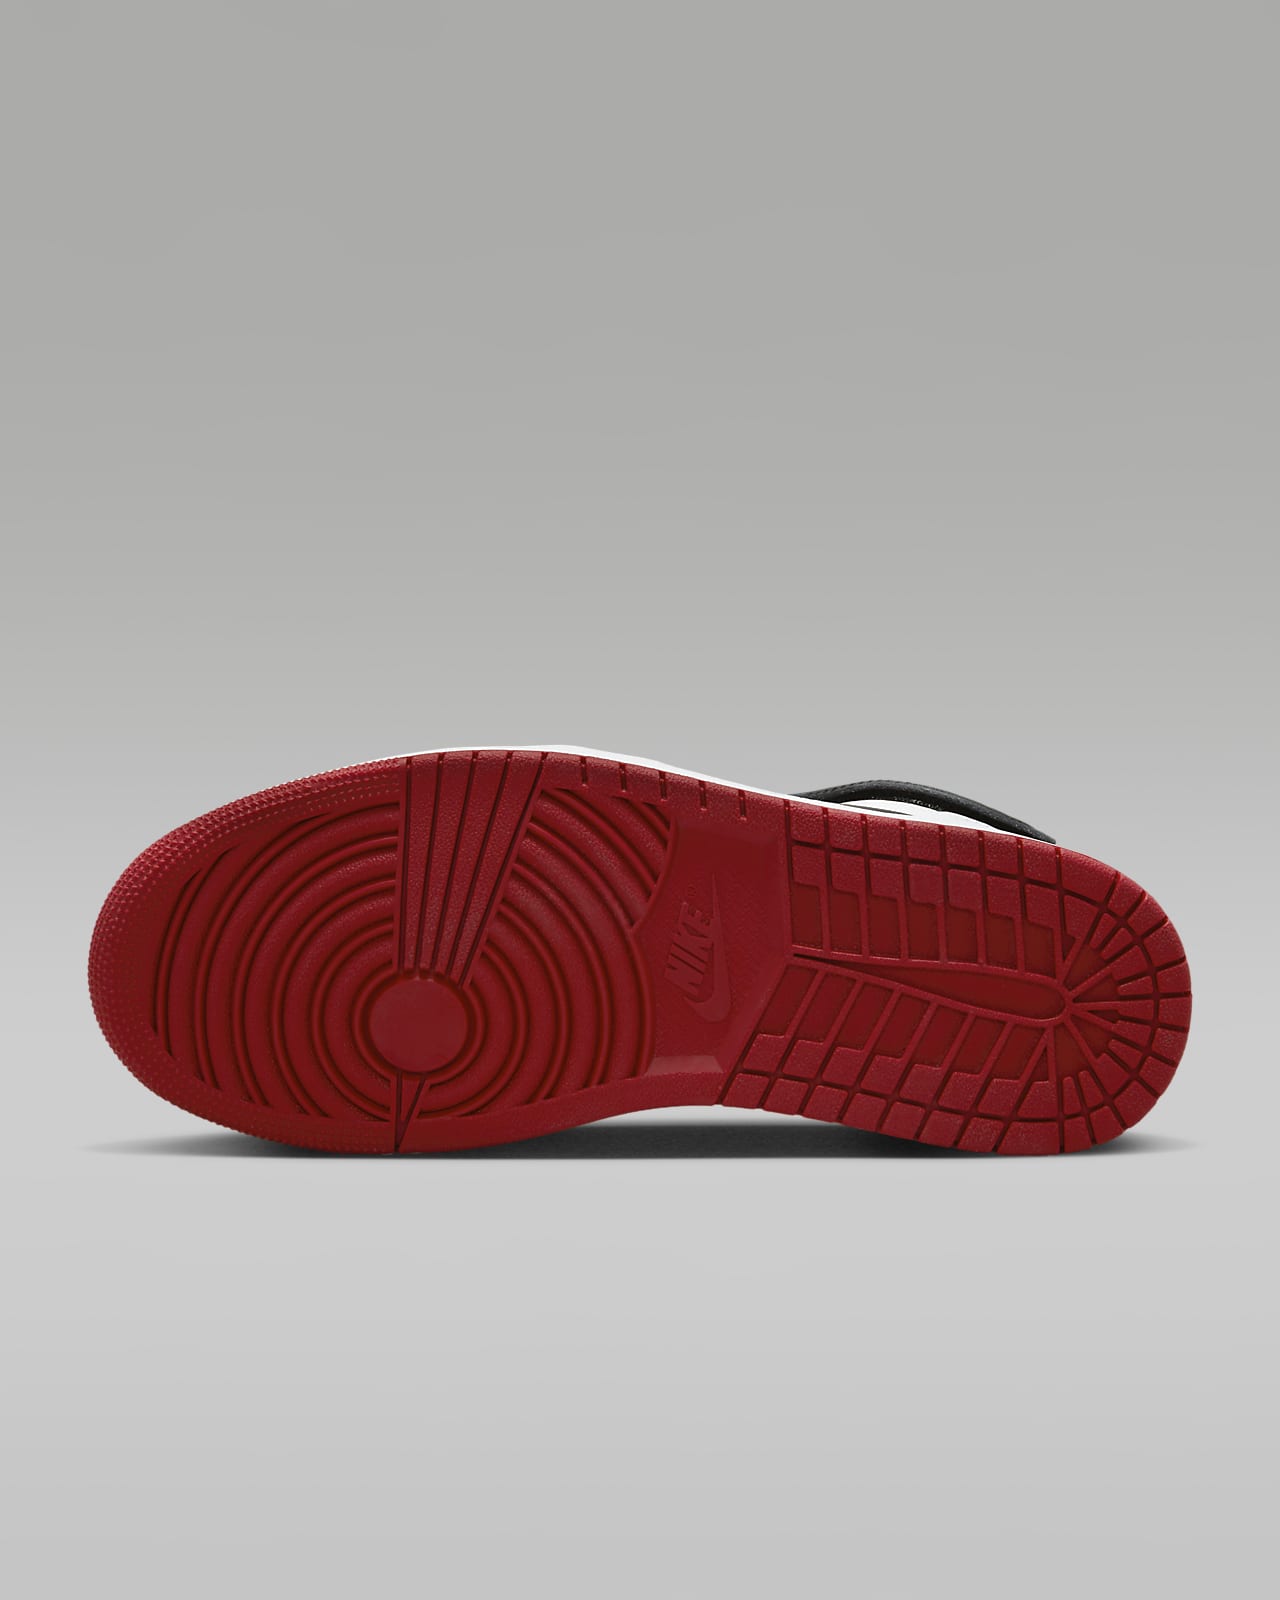 Nike's OG Air Jordan 1 is getting a refresh